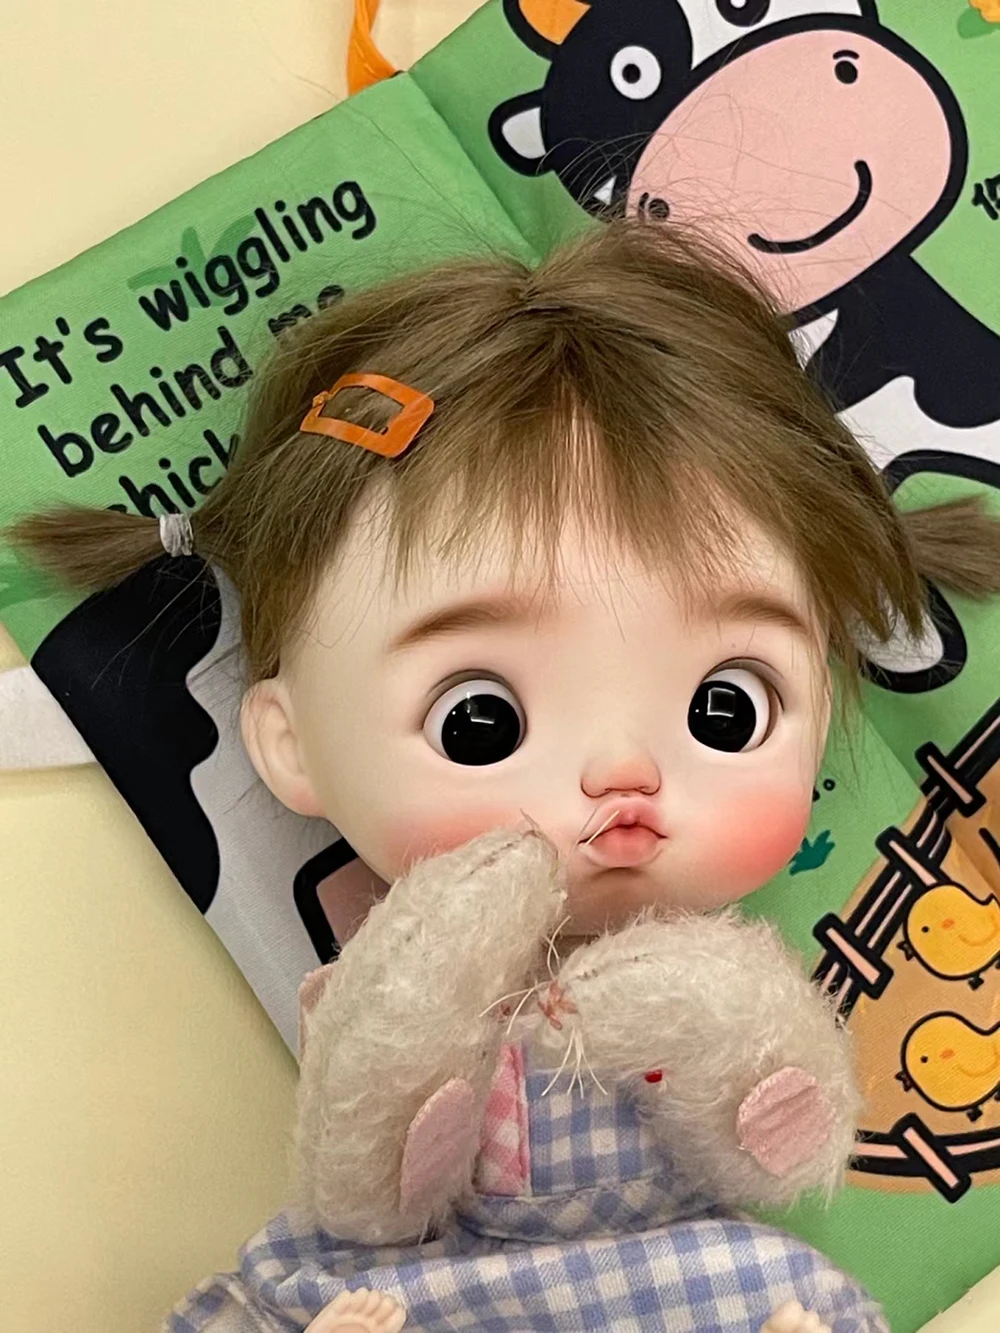 

New bjd sd Girl Big Head 1/6 25cm zhuzhubao doll resin toy birthday gift Spot makeup free shipping